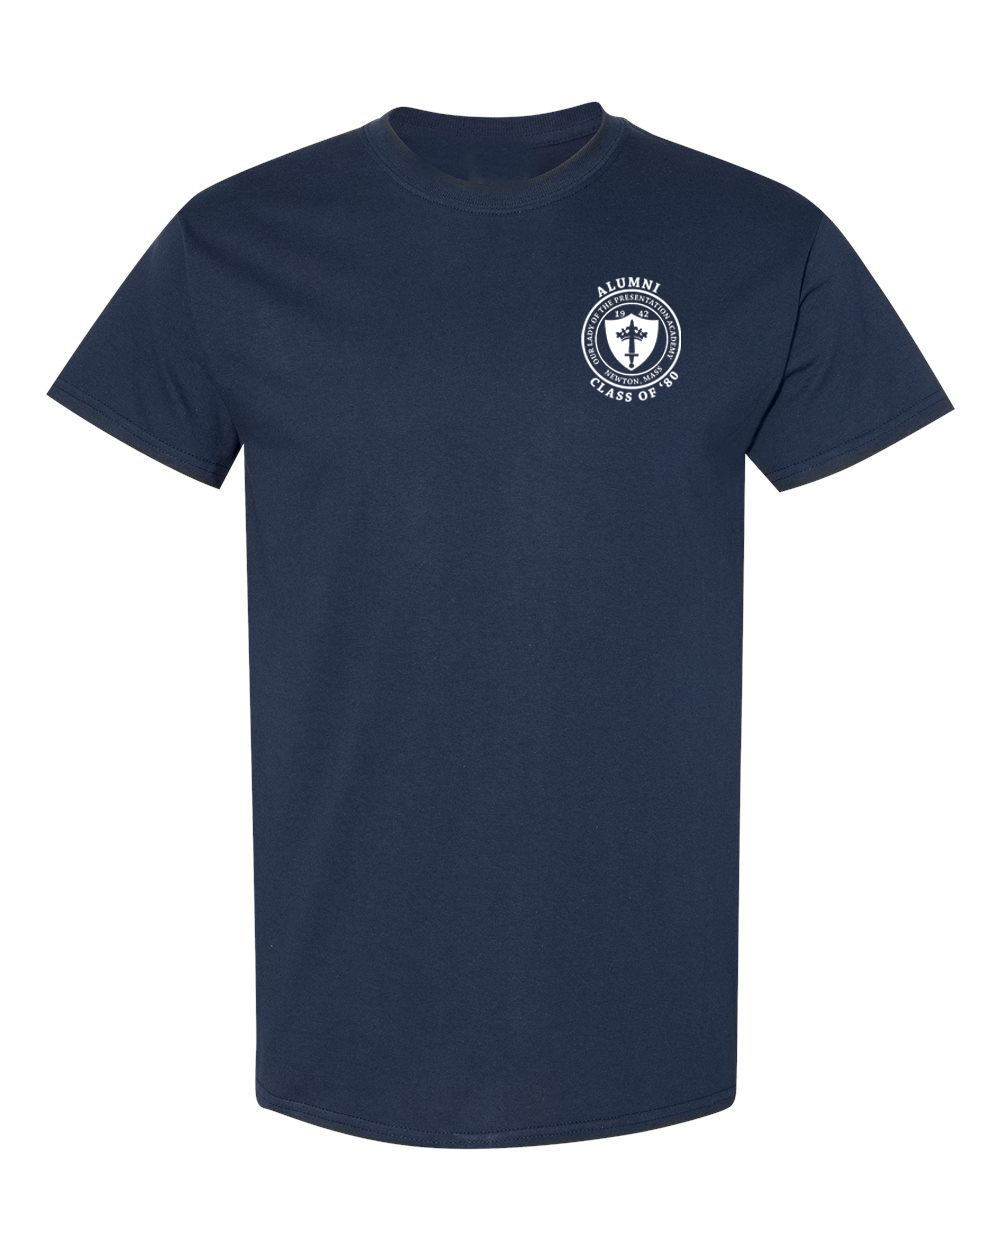 OLP Academy short sleeve shirt front navy